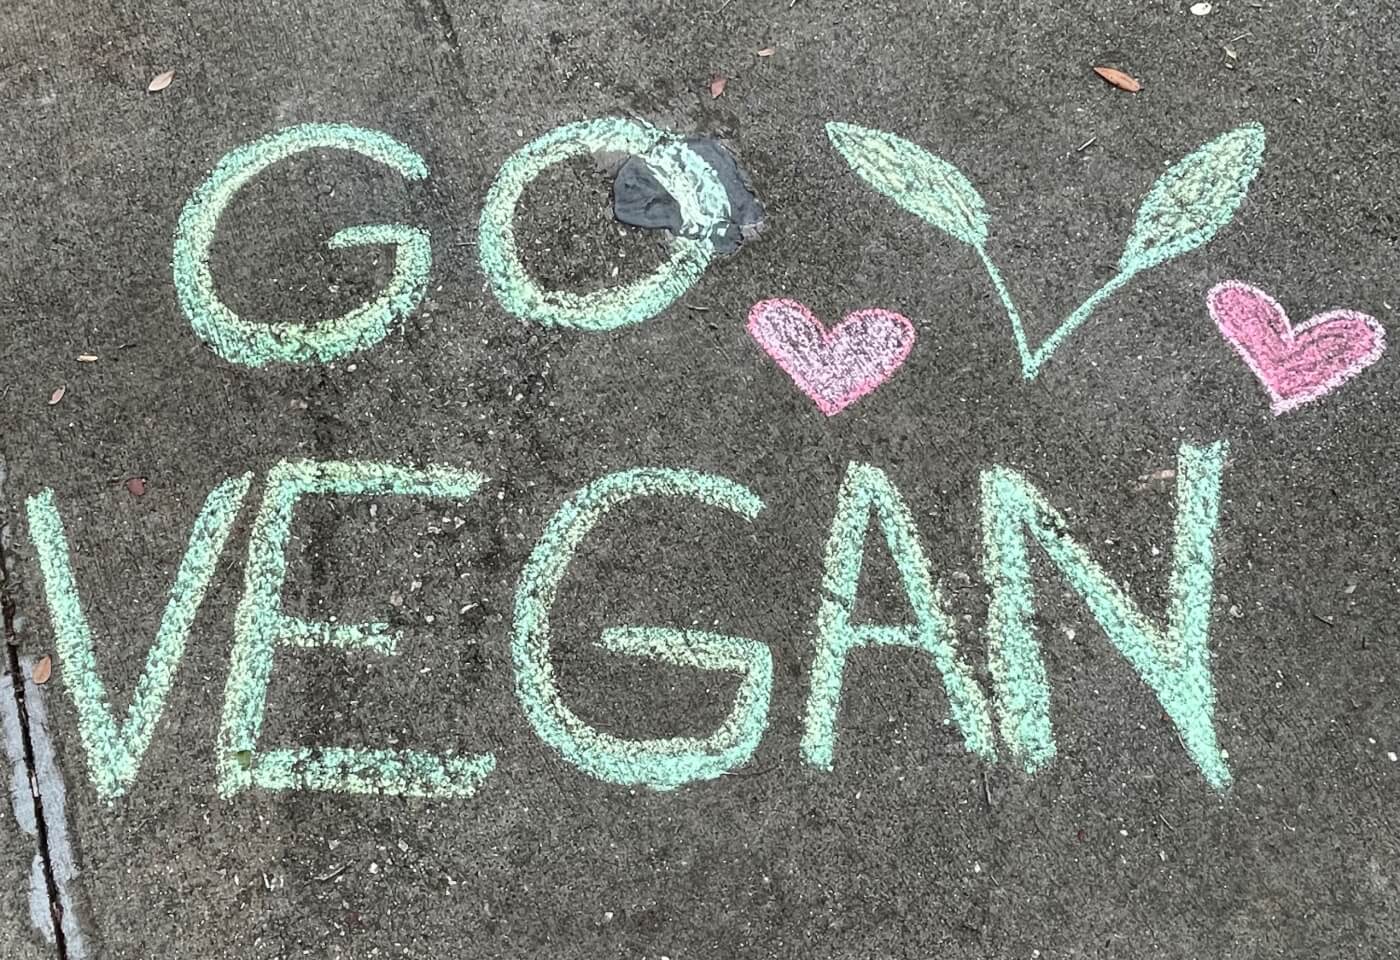 chalk art on a driveway that says "go vegan"